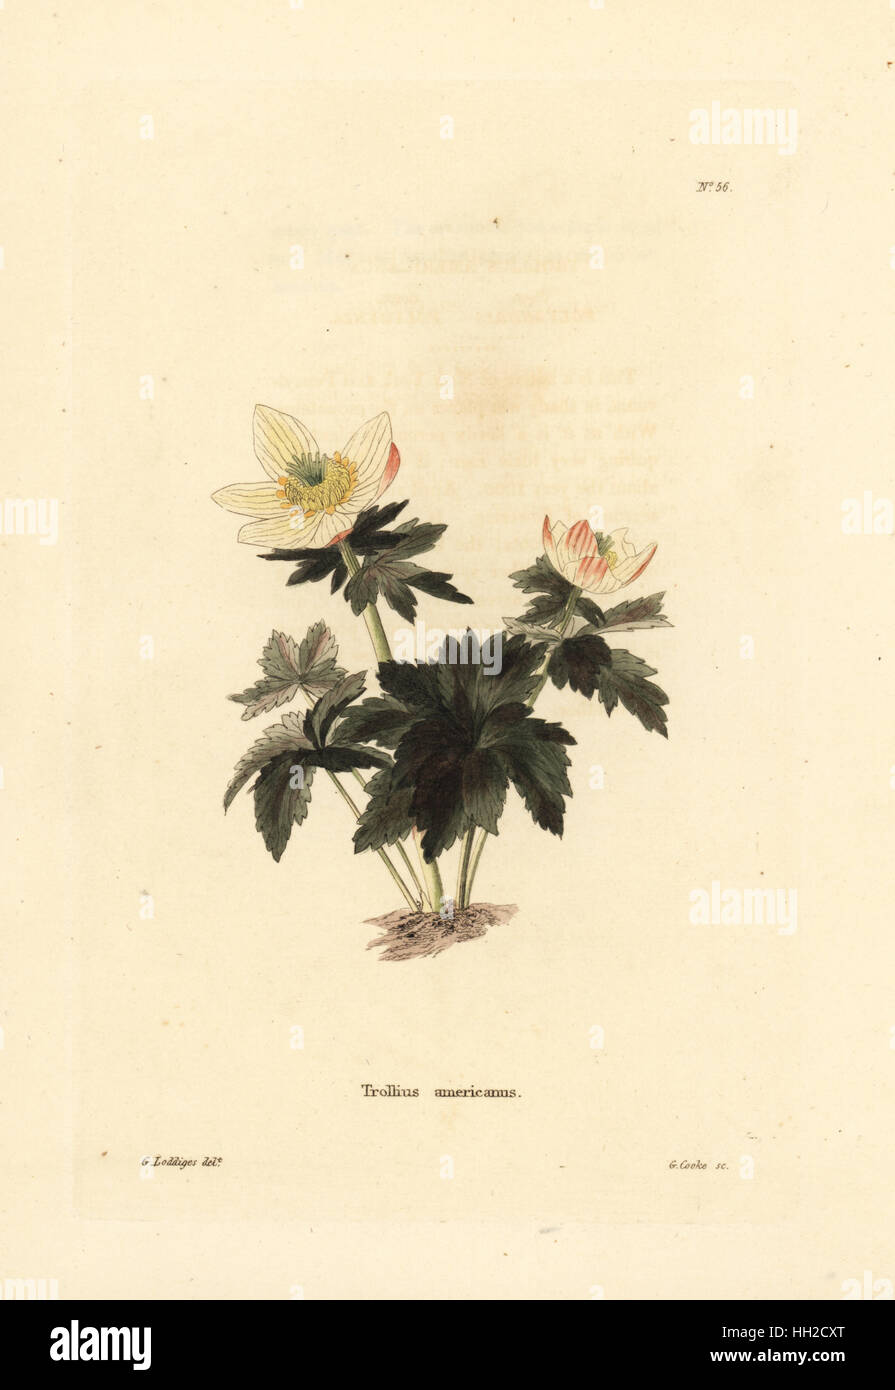 American globeflower, Trollius laxus (Trollius americanus). Handcoloured copperplate engraving by George Cooke after George Loddiges from Conrad Loddiges' Botanical Cabinet, Hackney, 1817. Stock Photo